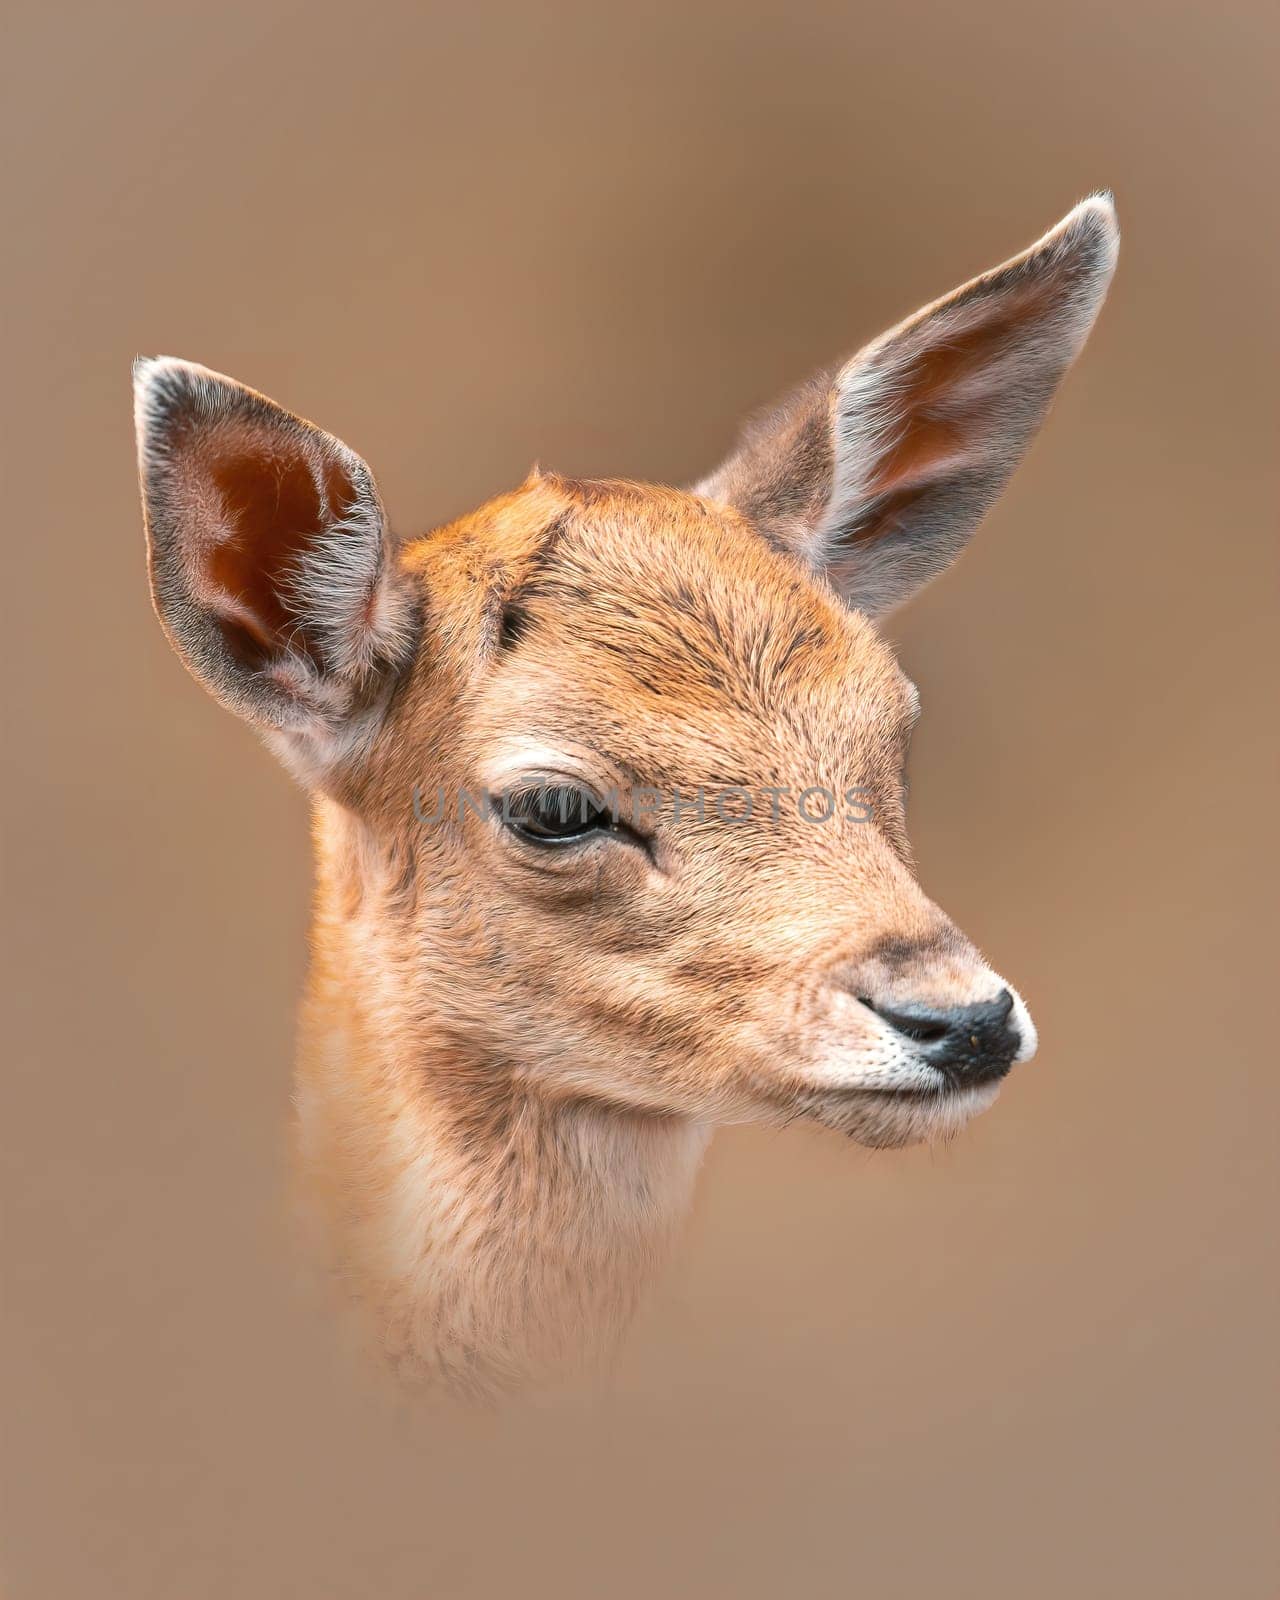 a portrait of a young fallow deer calf